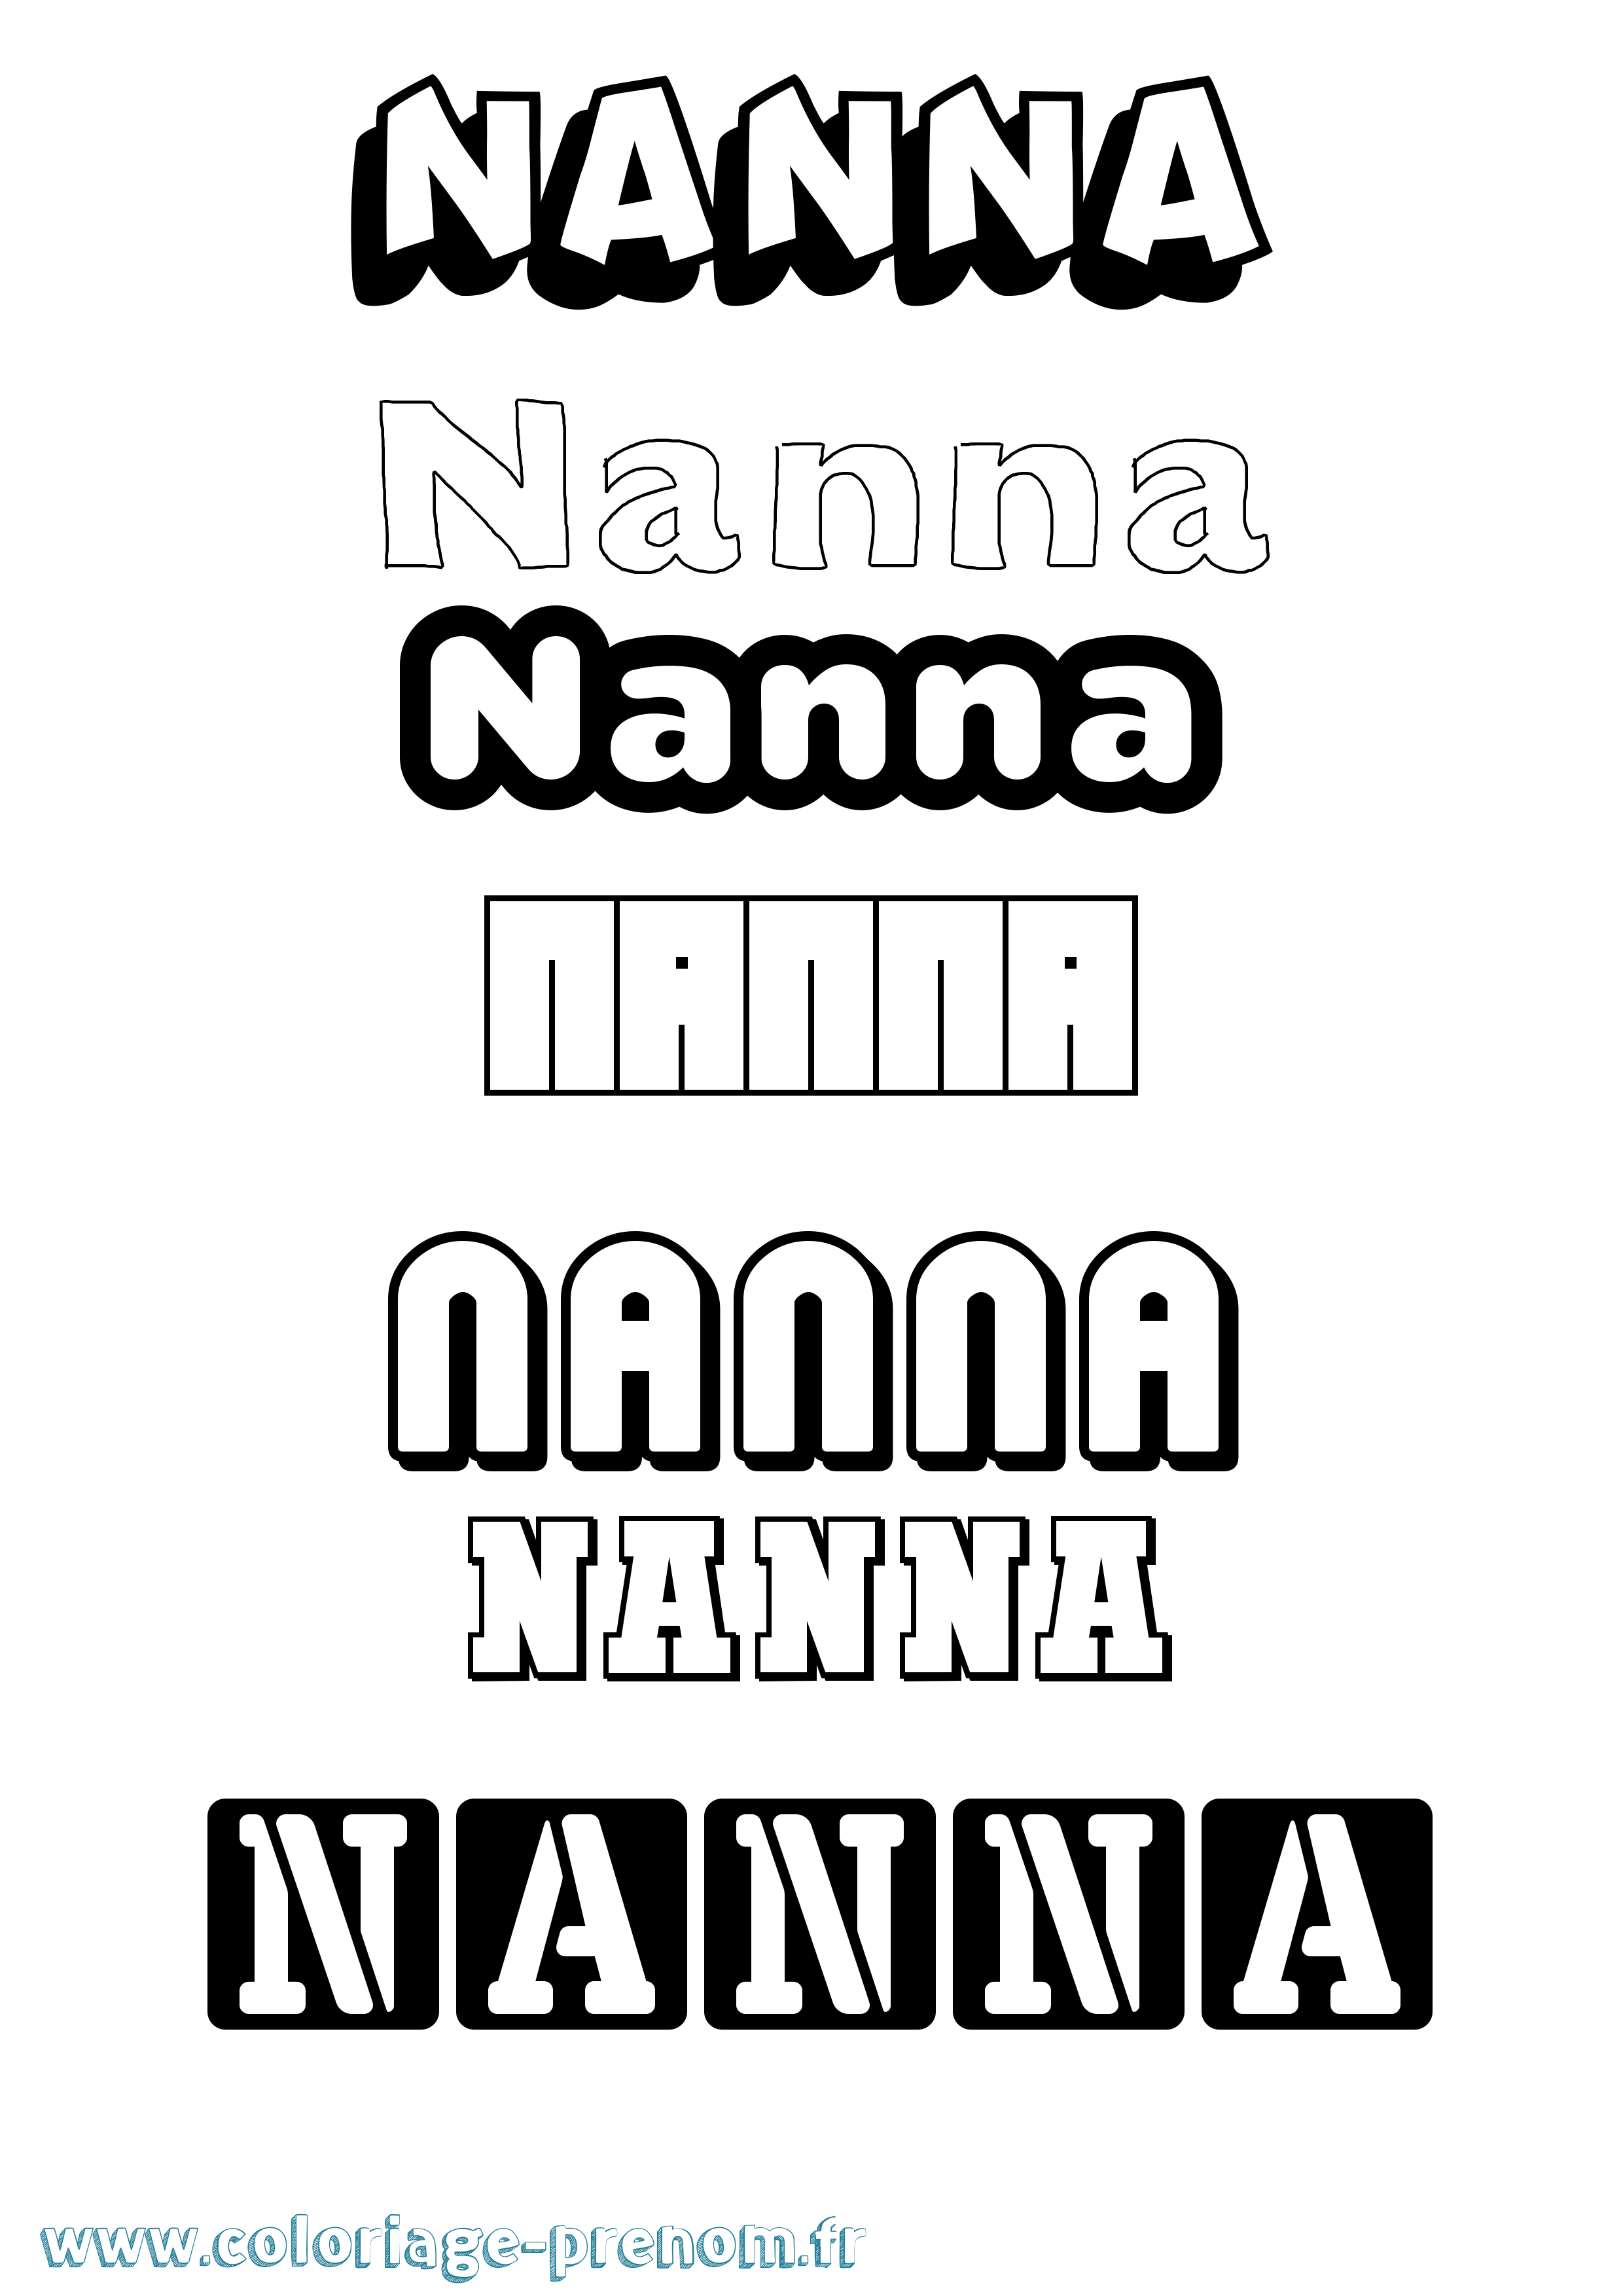 Coloriage prénom Nanna Simple